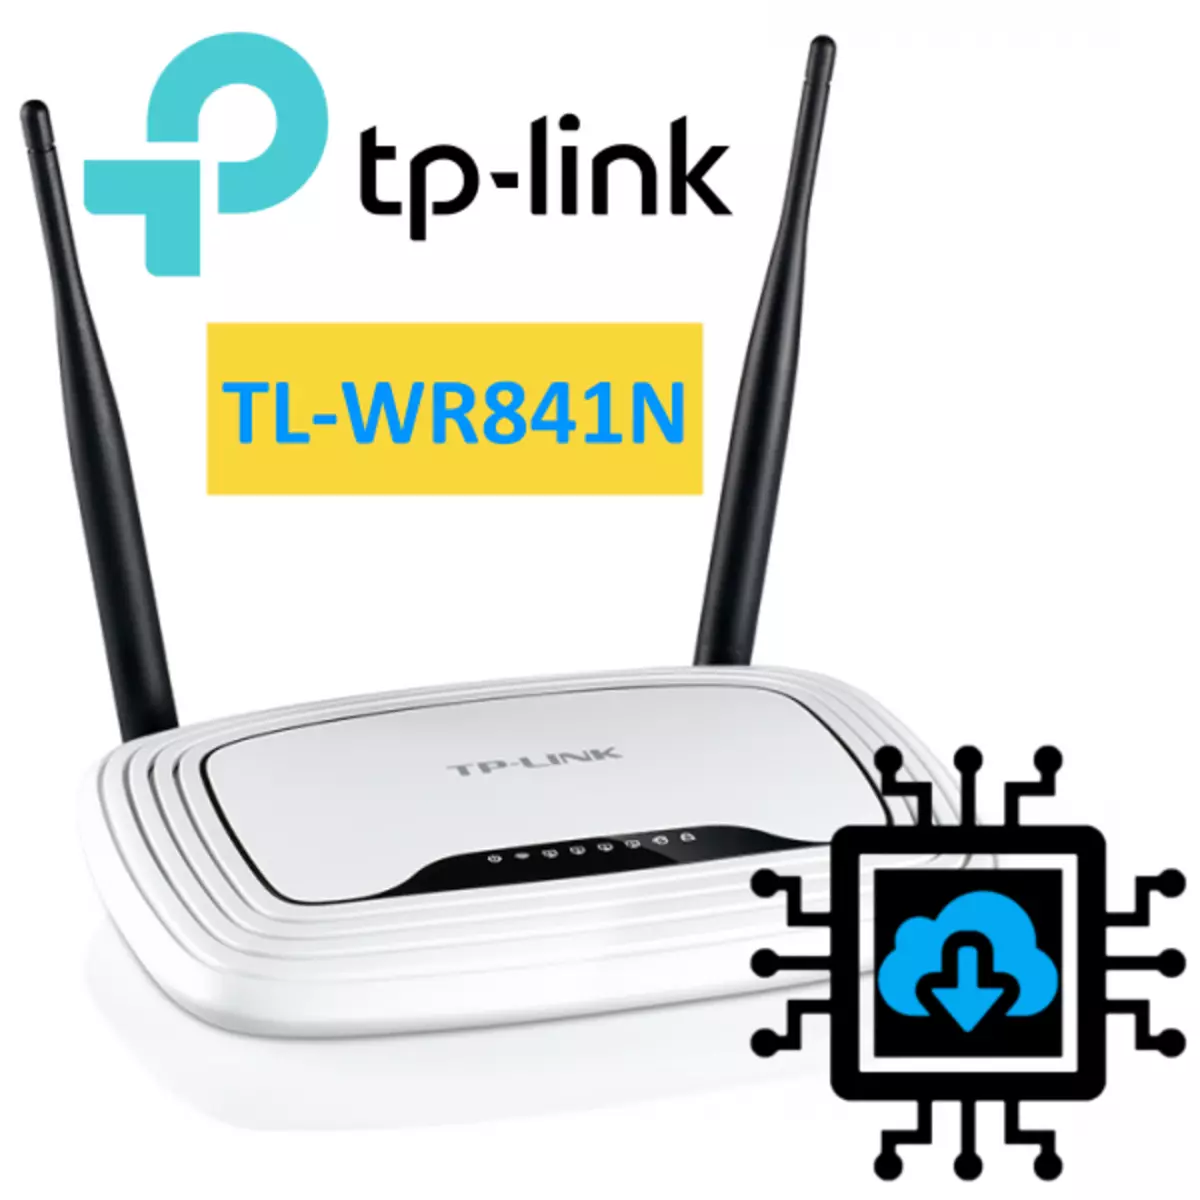 TP-LINK TL-WR841N Router firmware proqramı